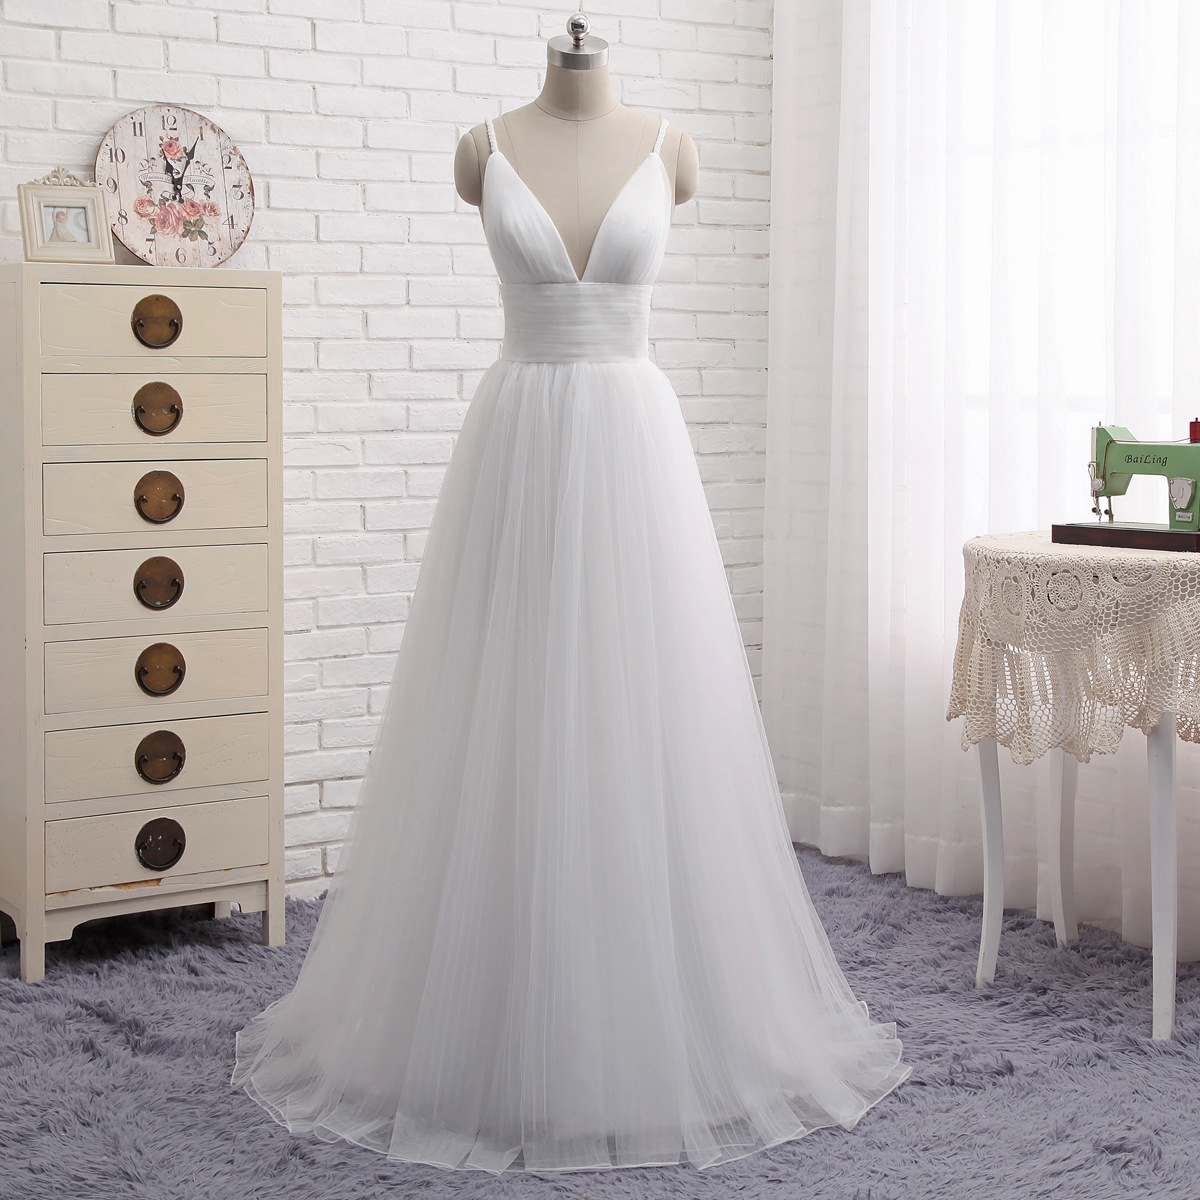 Spaghetti Strap Evening Dress, White Wedding Dress, Beach Bridal Dress,custom Made